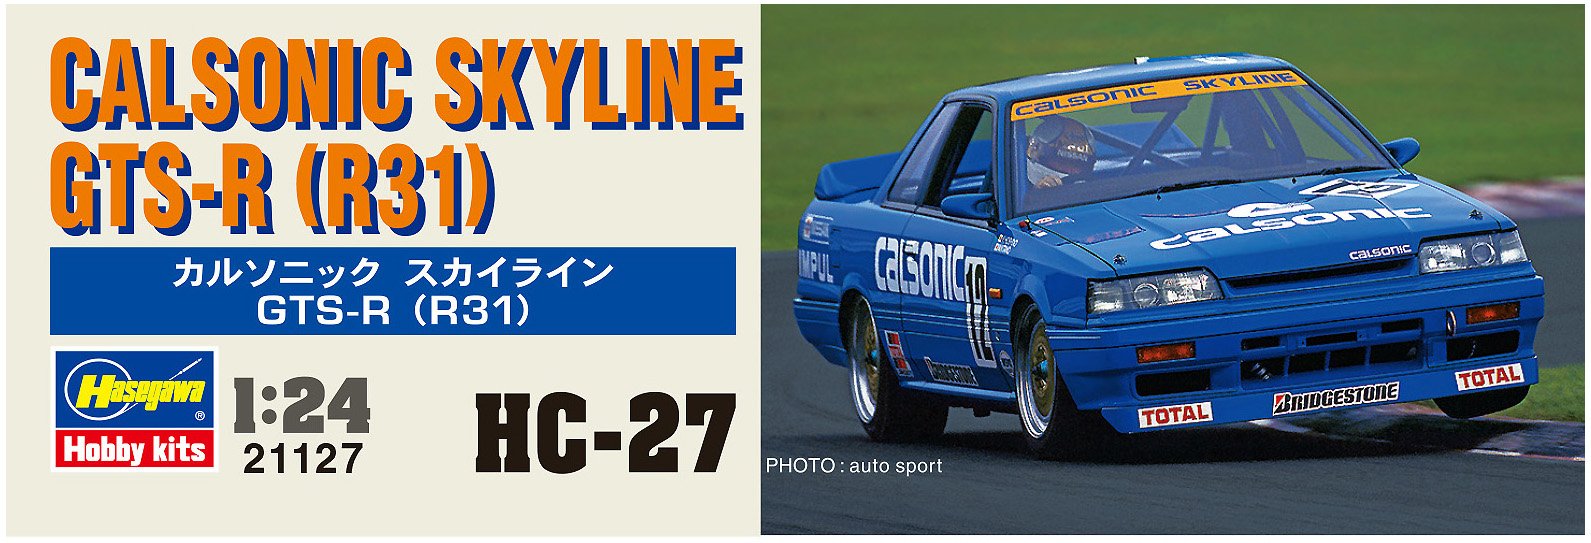 Hasegawa 1/24 Historic Car Series Calsonic Skyline GTS-R R31 Model kit HMCC27_8